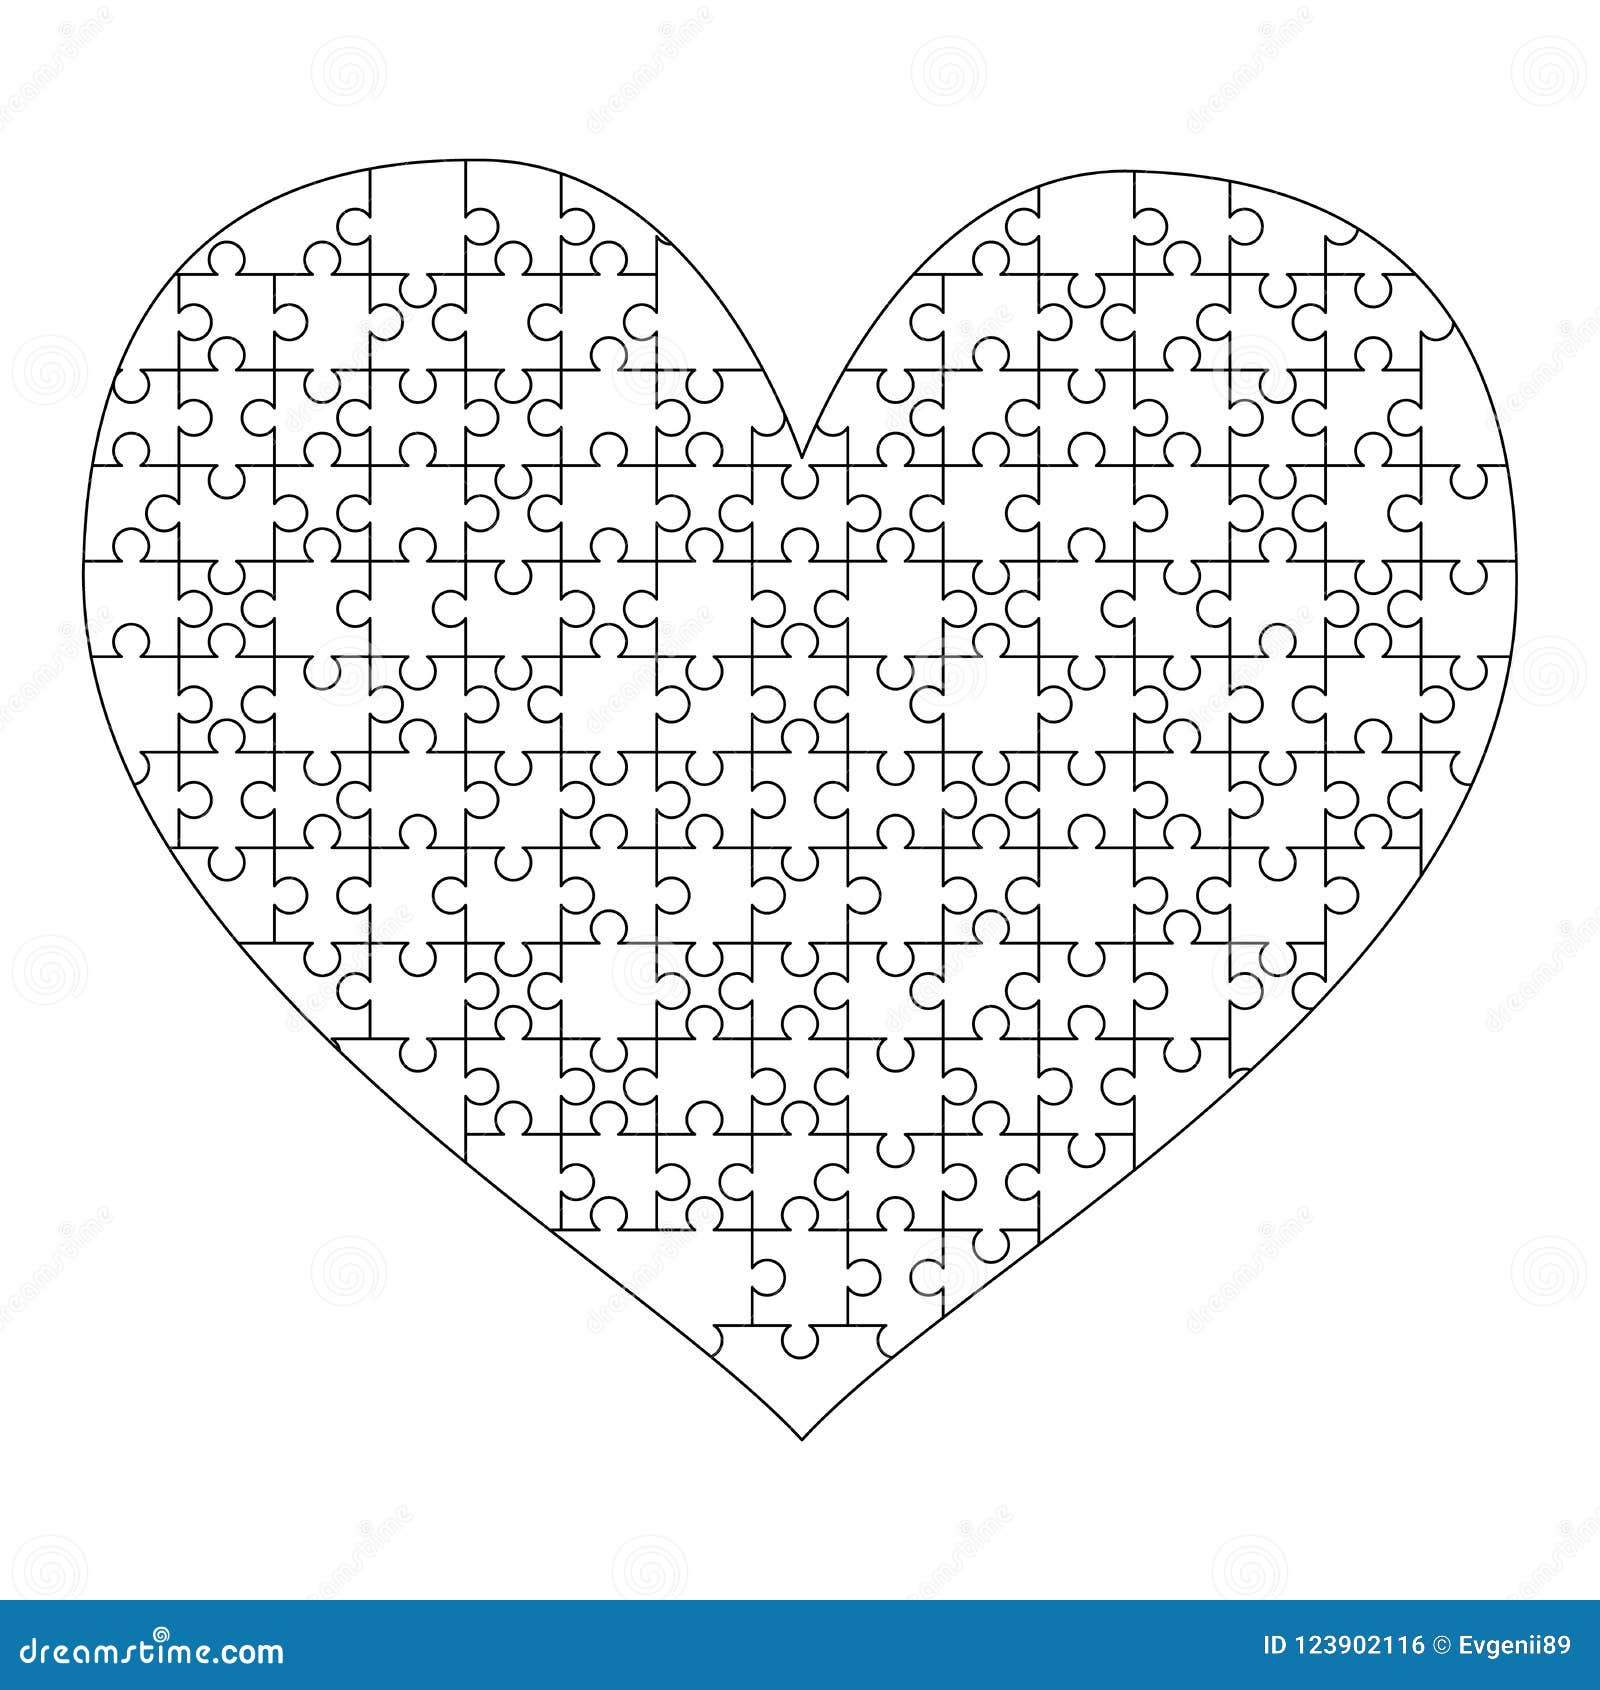 heart-puzzle-royalty-free-illustration-cartoondealer-32526